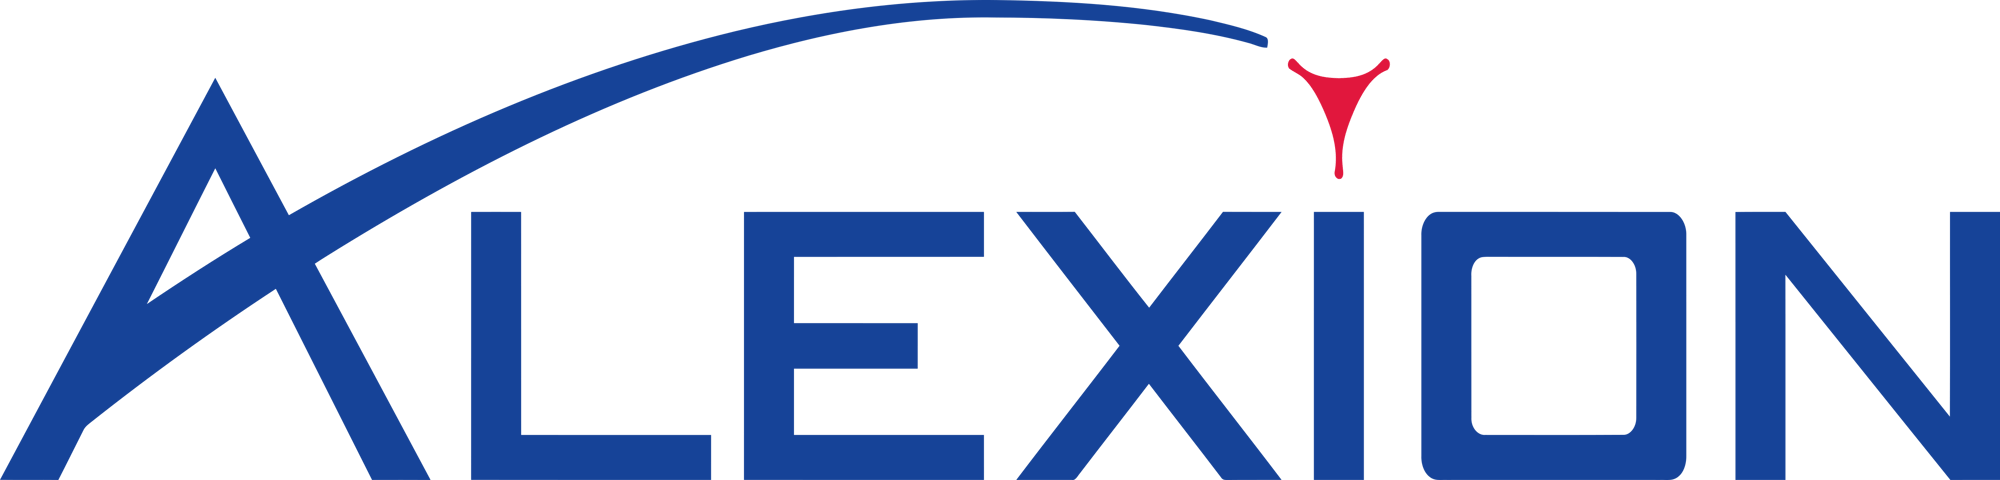 Alexion_Pharmaceuticals_Logo